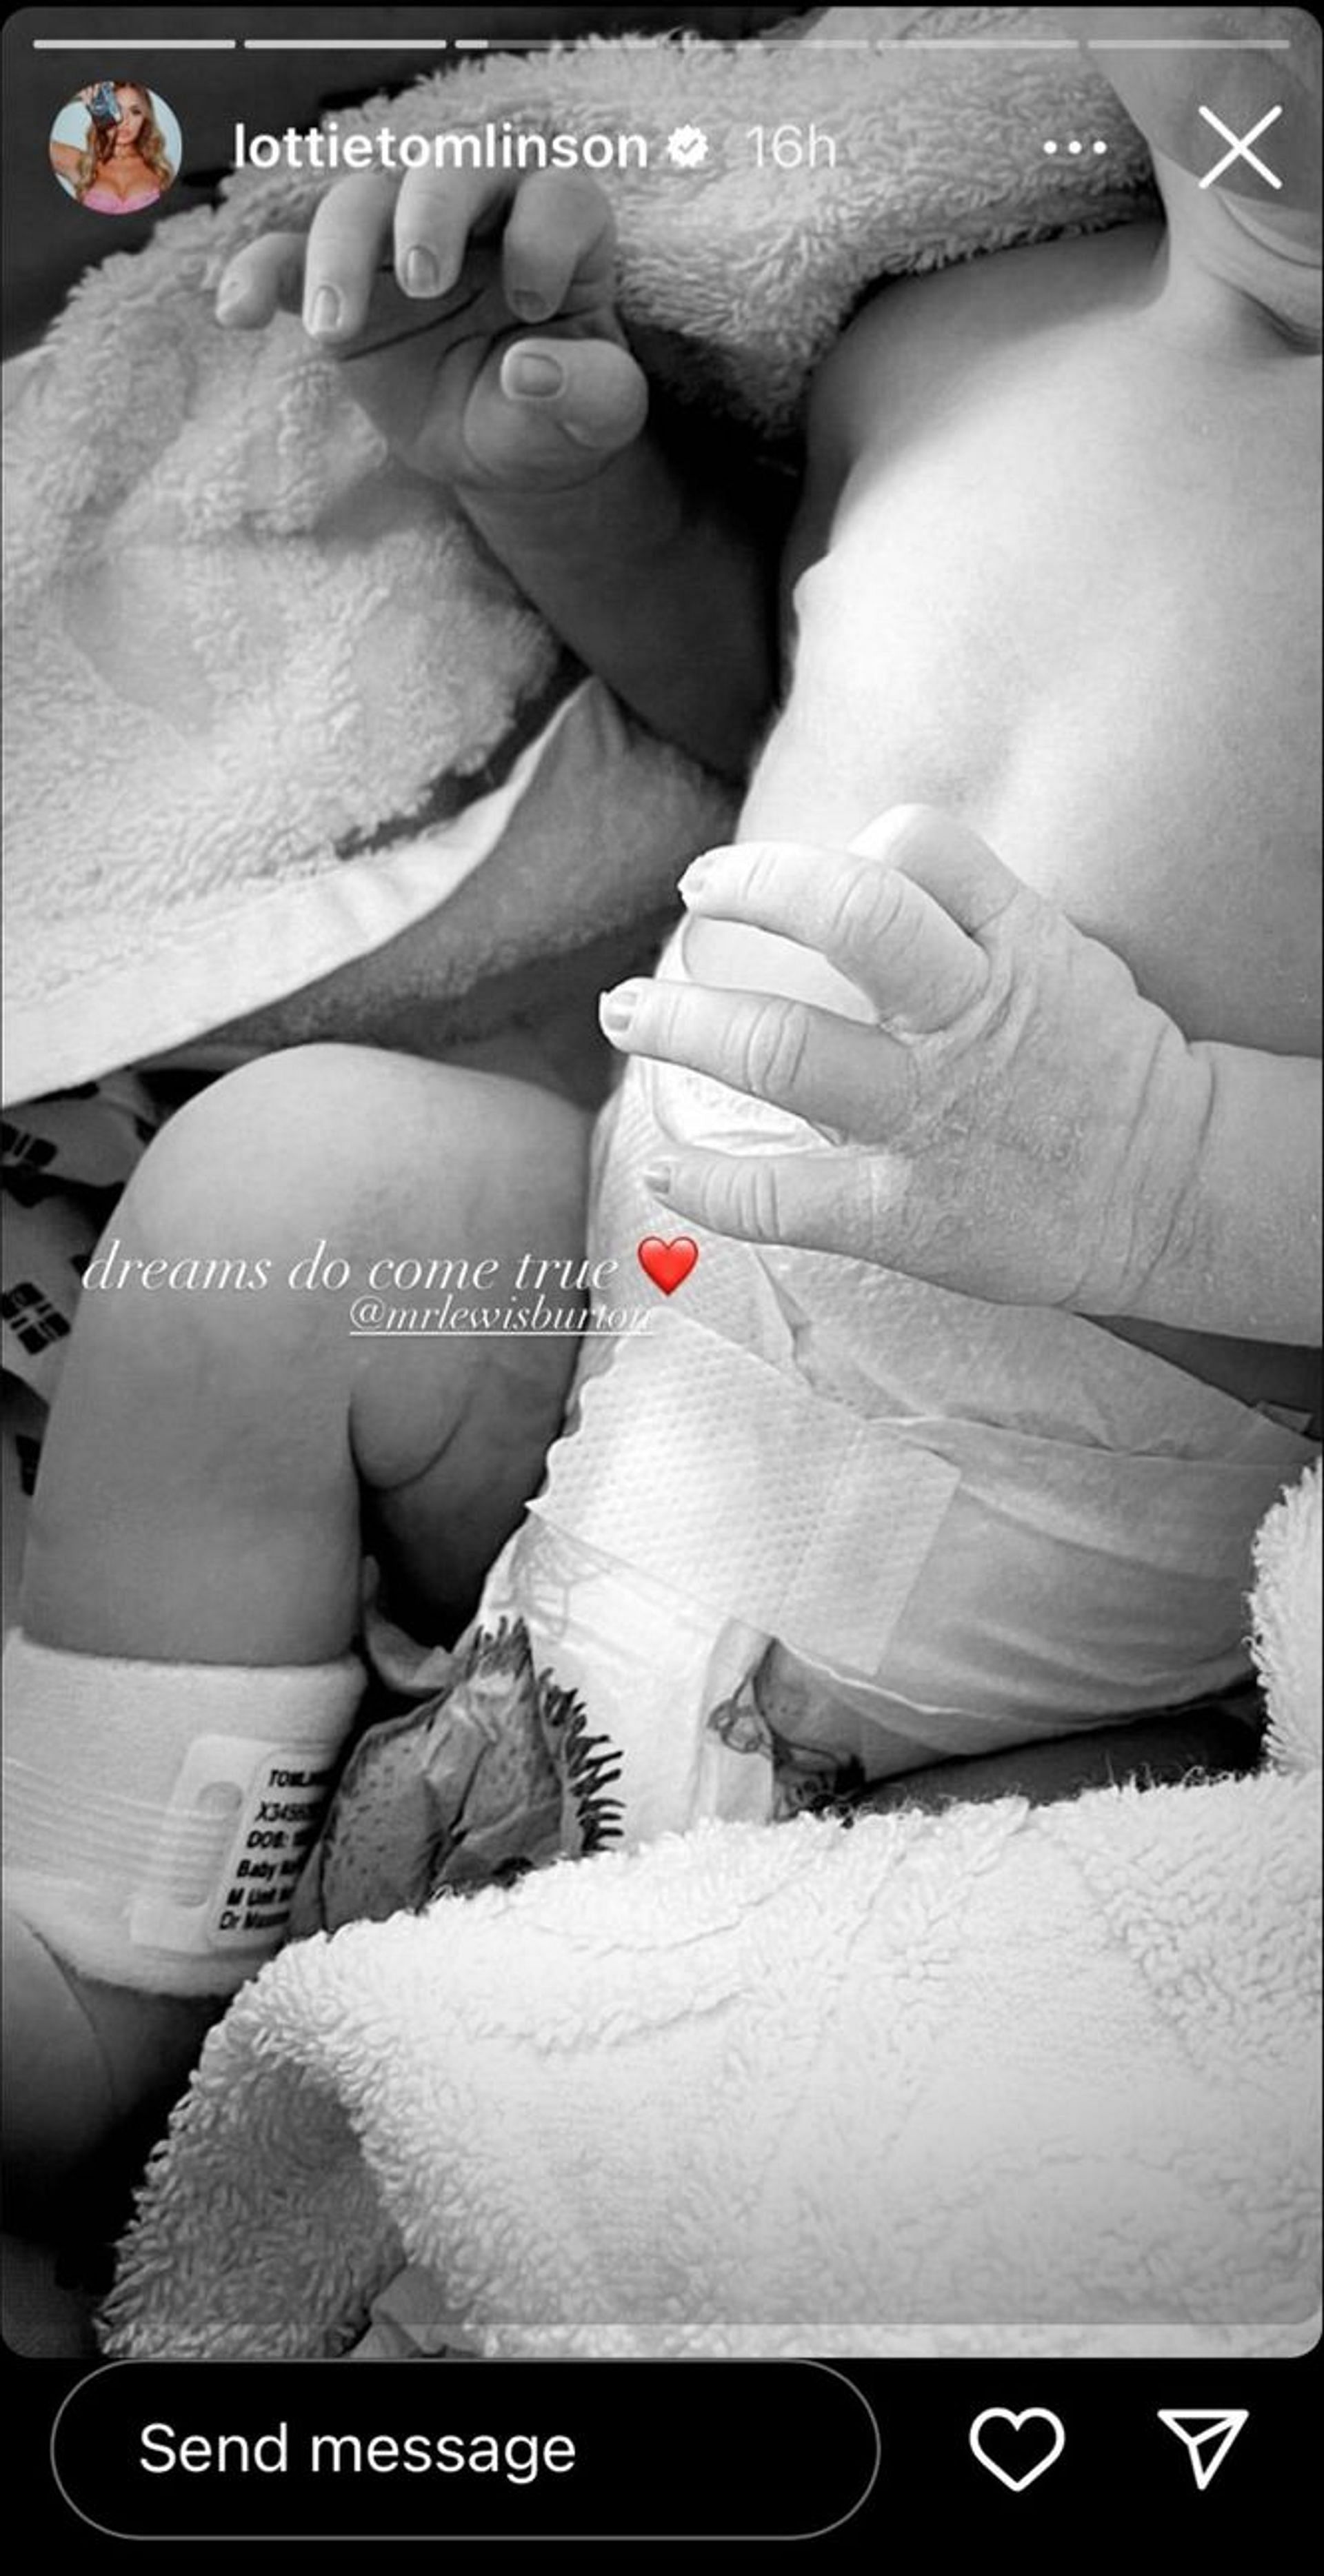 Lottie Tomlinson&#039;s Instagram story after giving birth to a baby boy. (Image via Instagram/lottietomlinson)